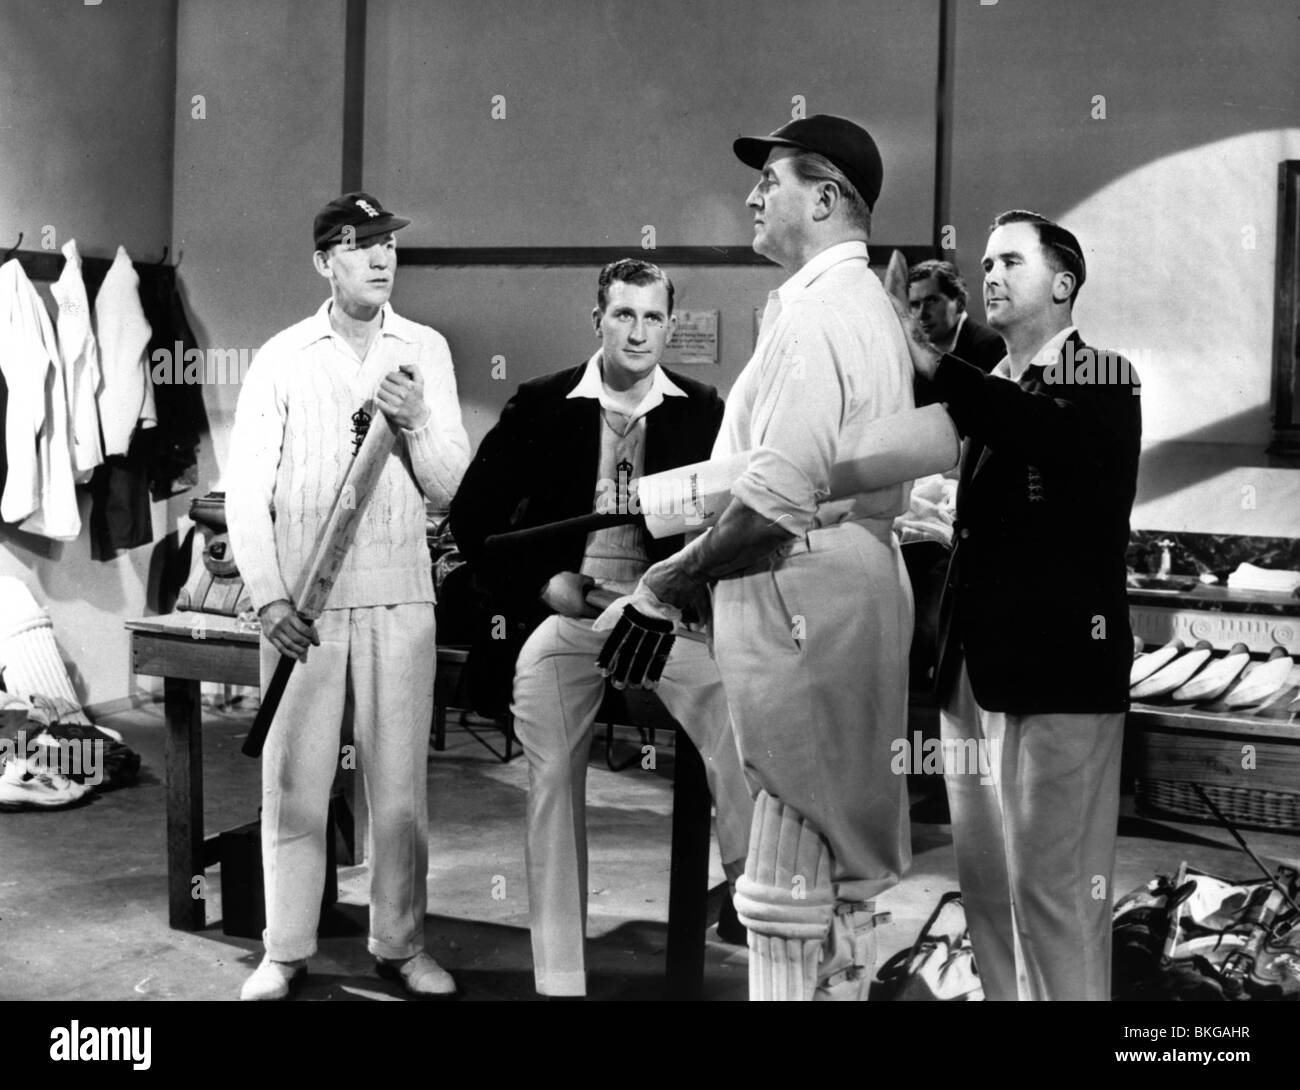 THE FINAL TEST (1953) FRED HAGGERTY, JIM LAKER, JACK WARNER, GODFREY EVANS FNLT 001P Stock Photo